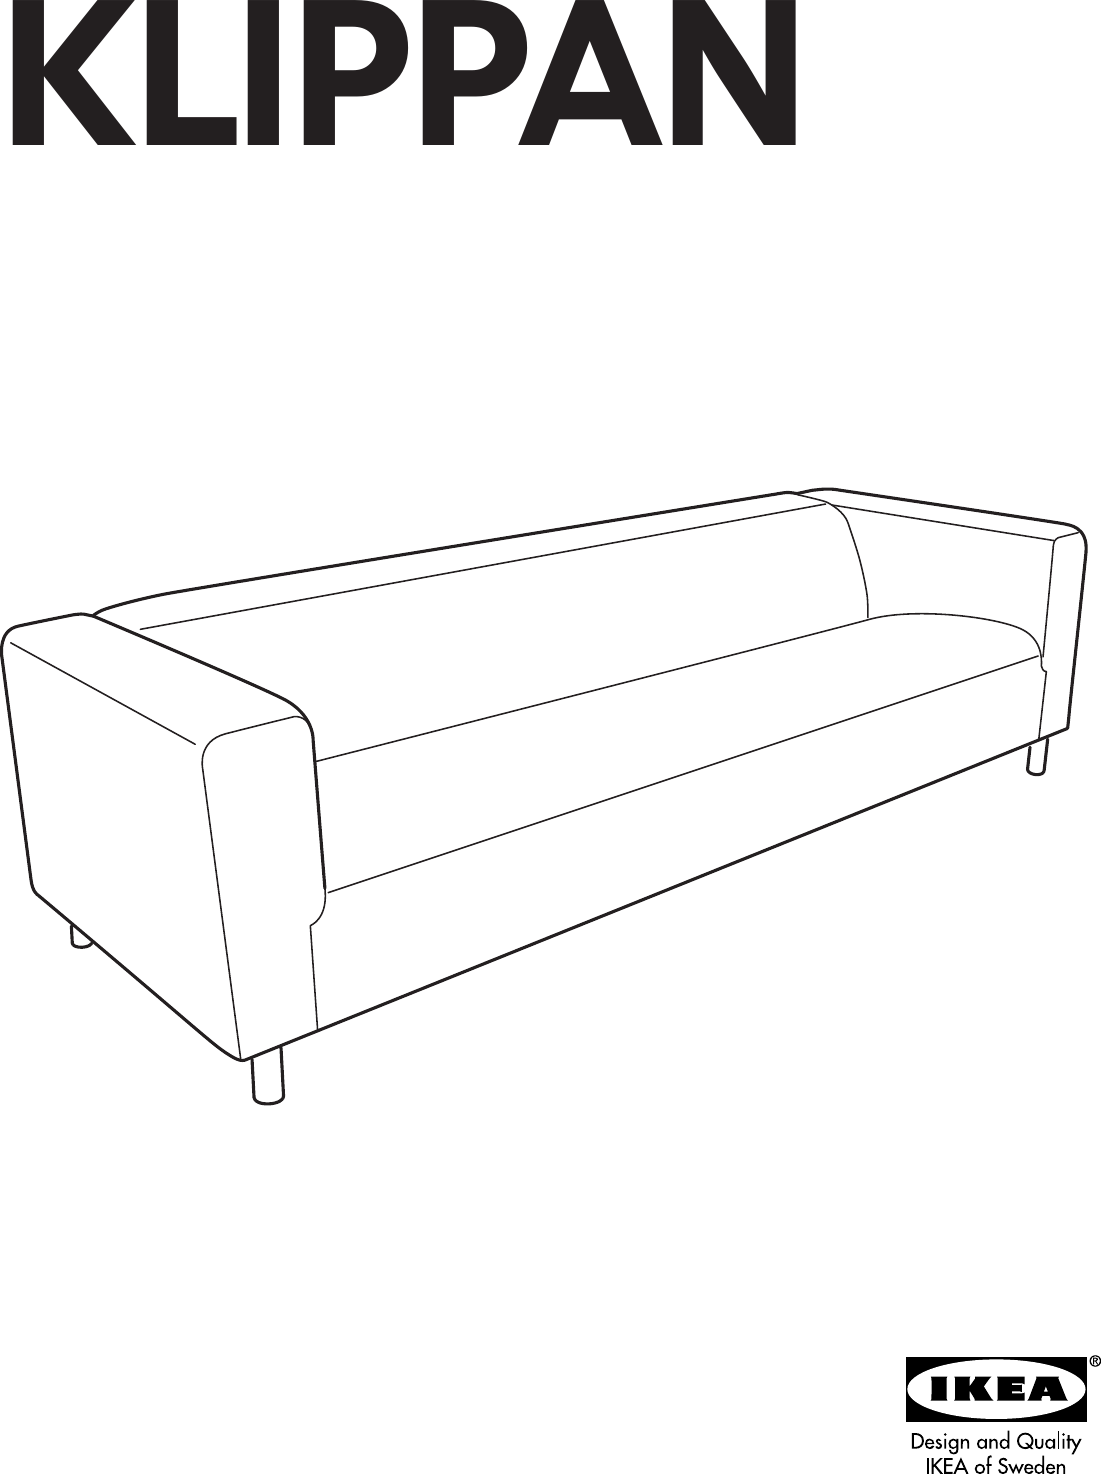 Page 1 of 8 - Ikea Ikea-Klippan-4-Seat-Sofa-Frame-Assembly-Instruction